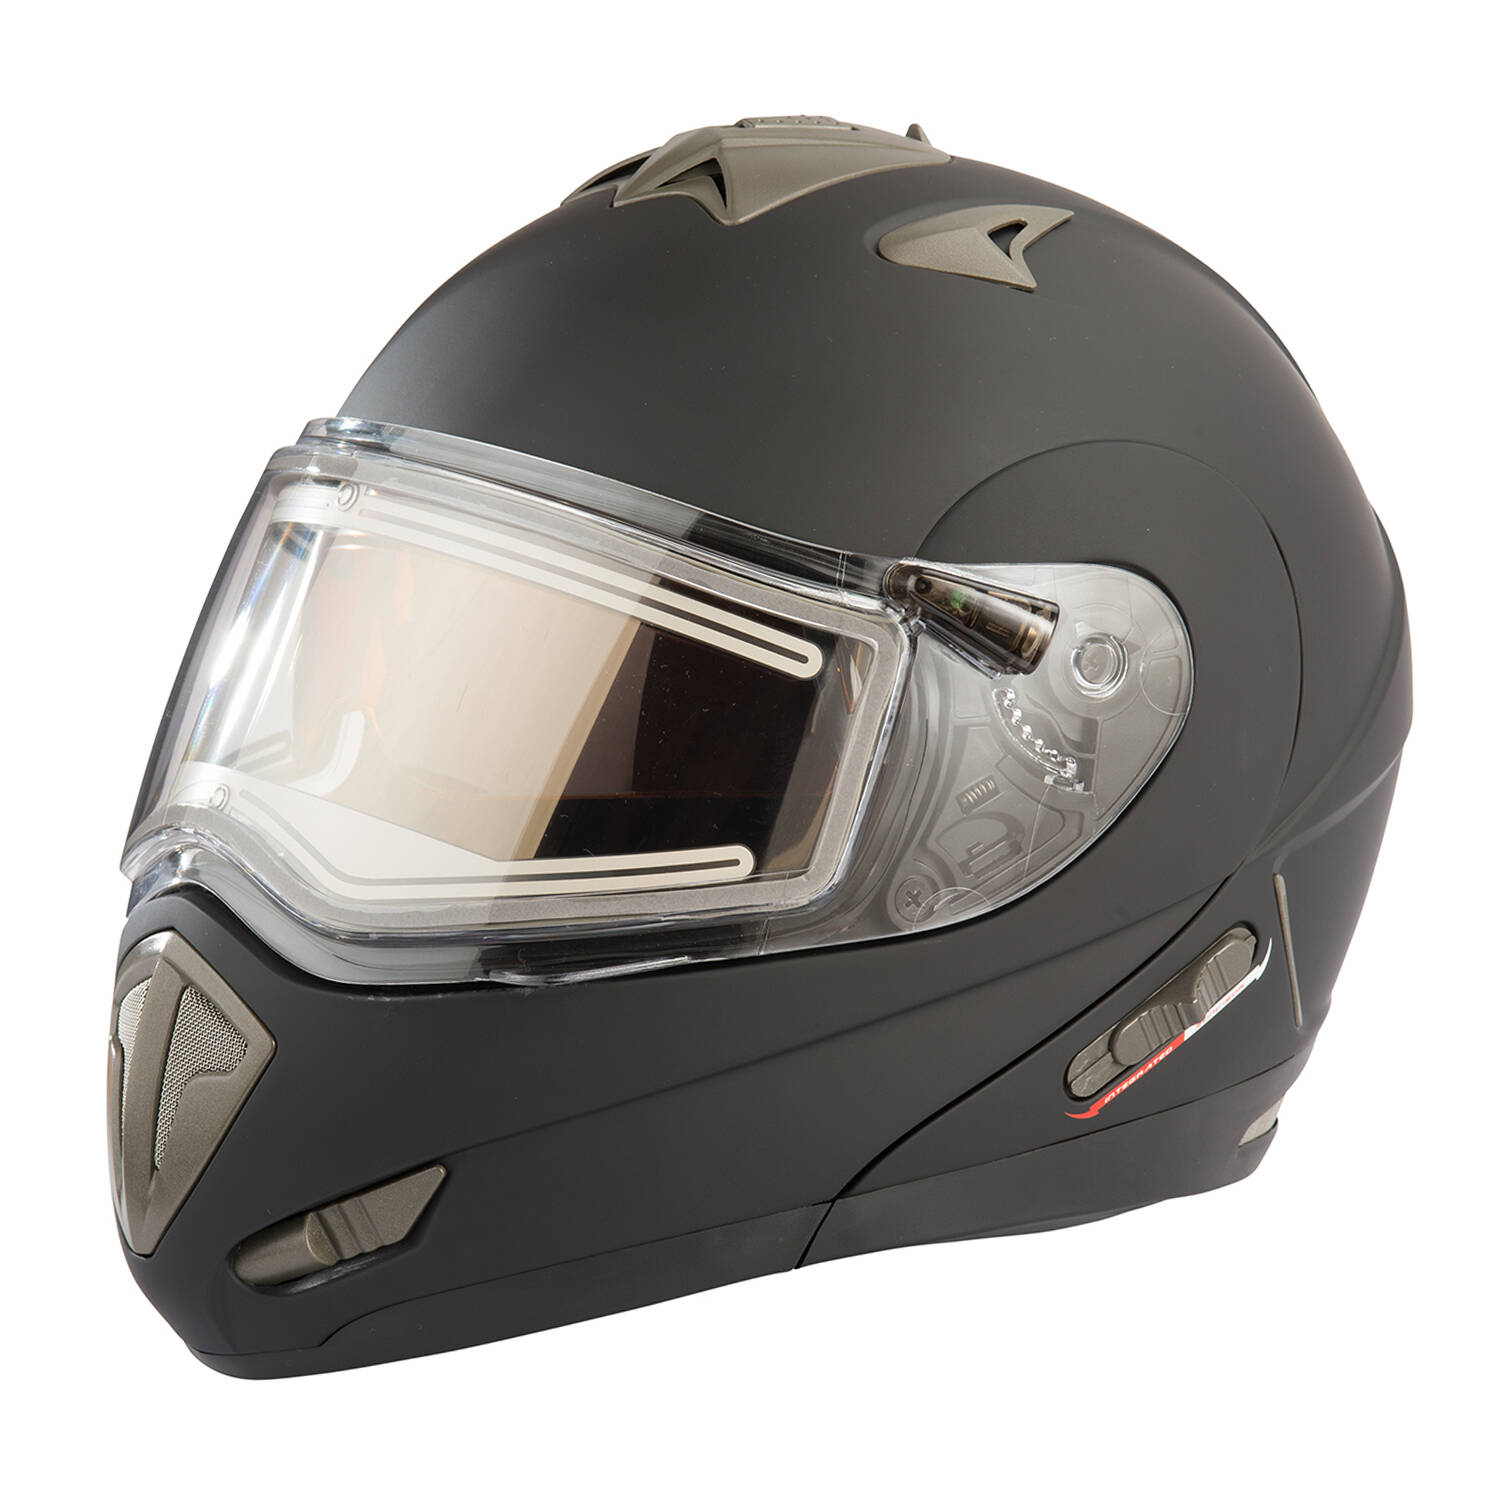 Polaris Modular 1.0 Adult Helmet with Electric Shield Black